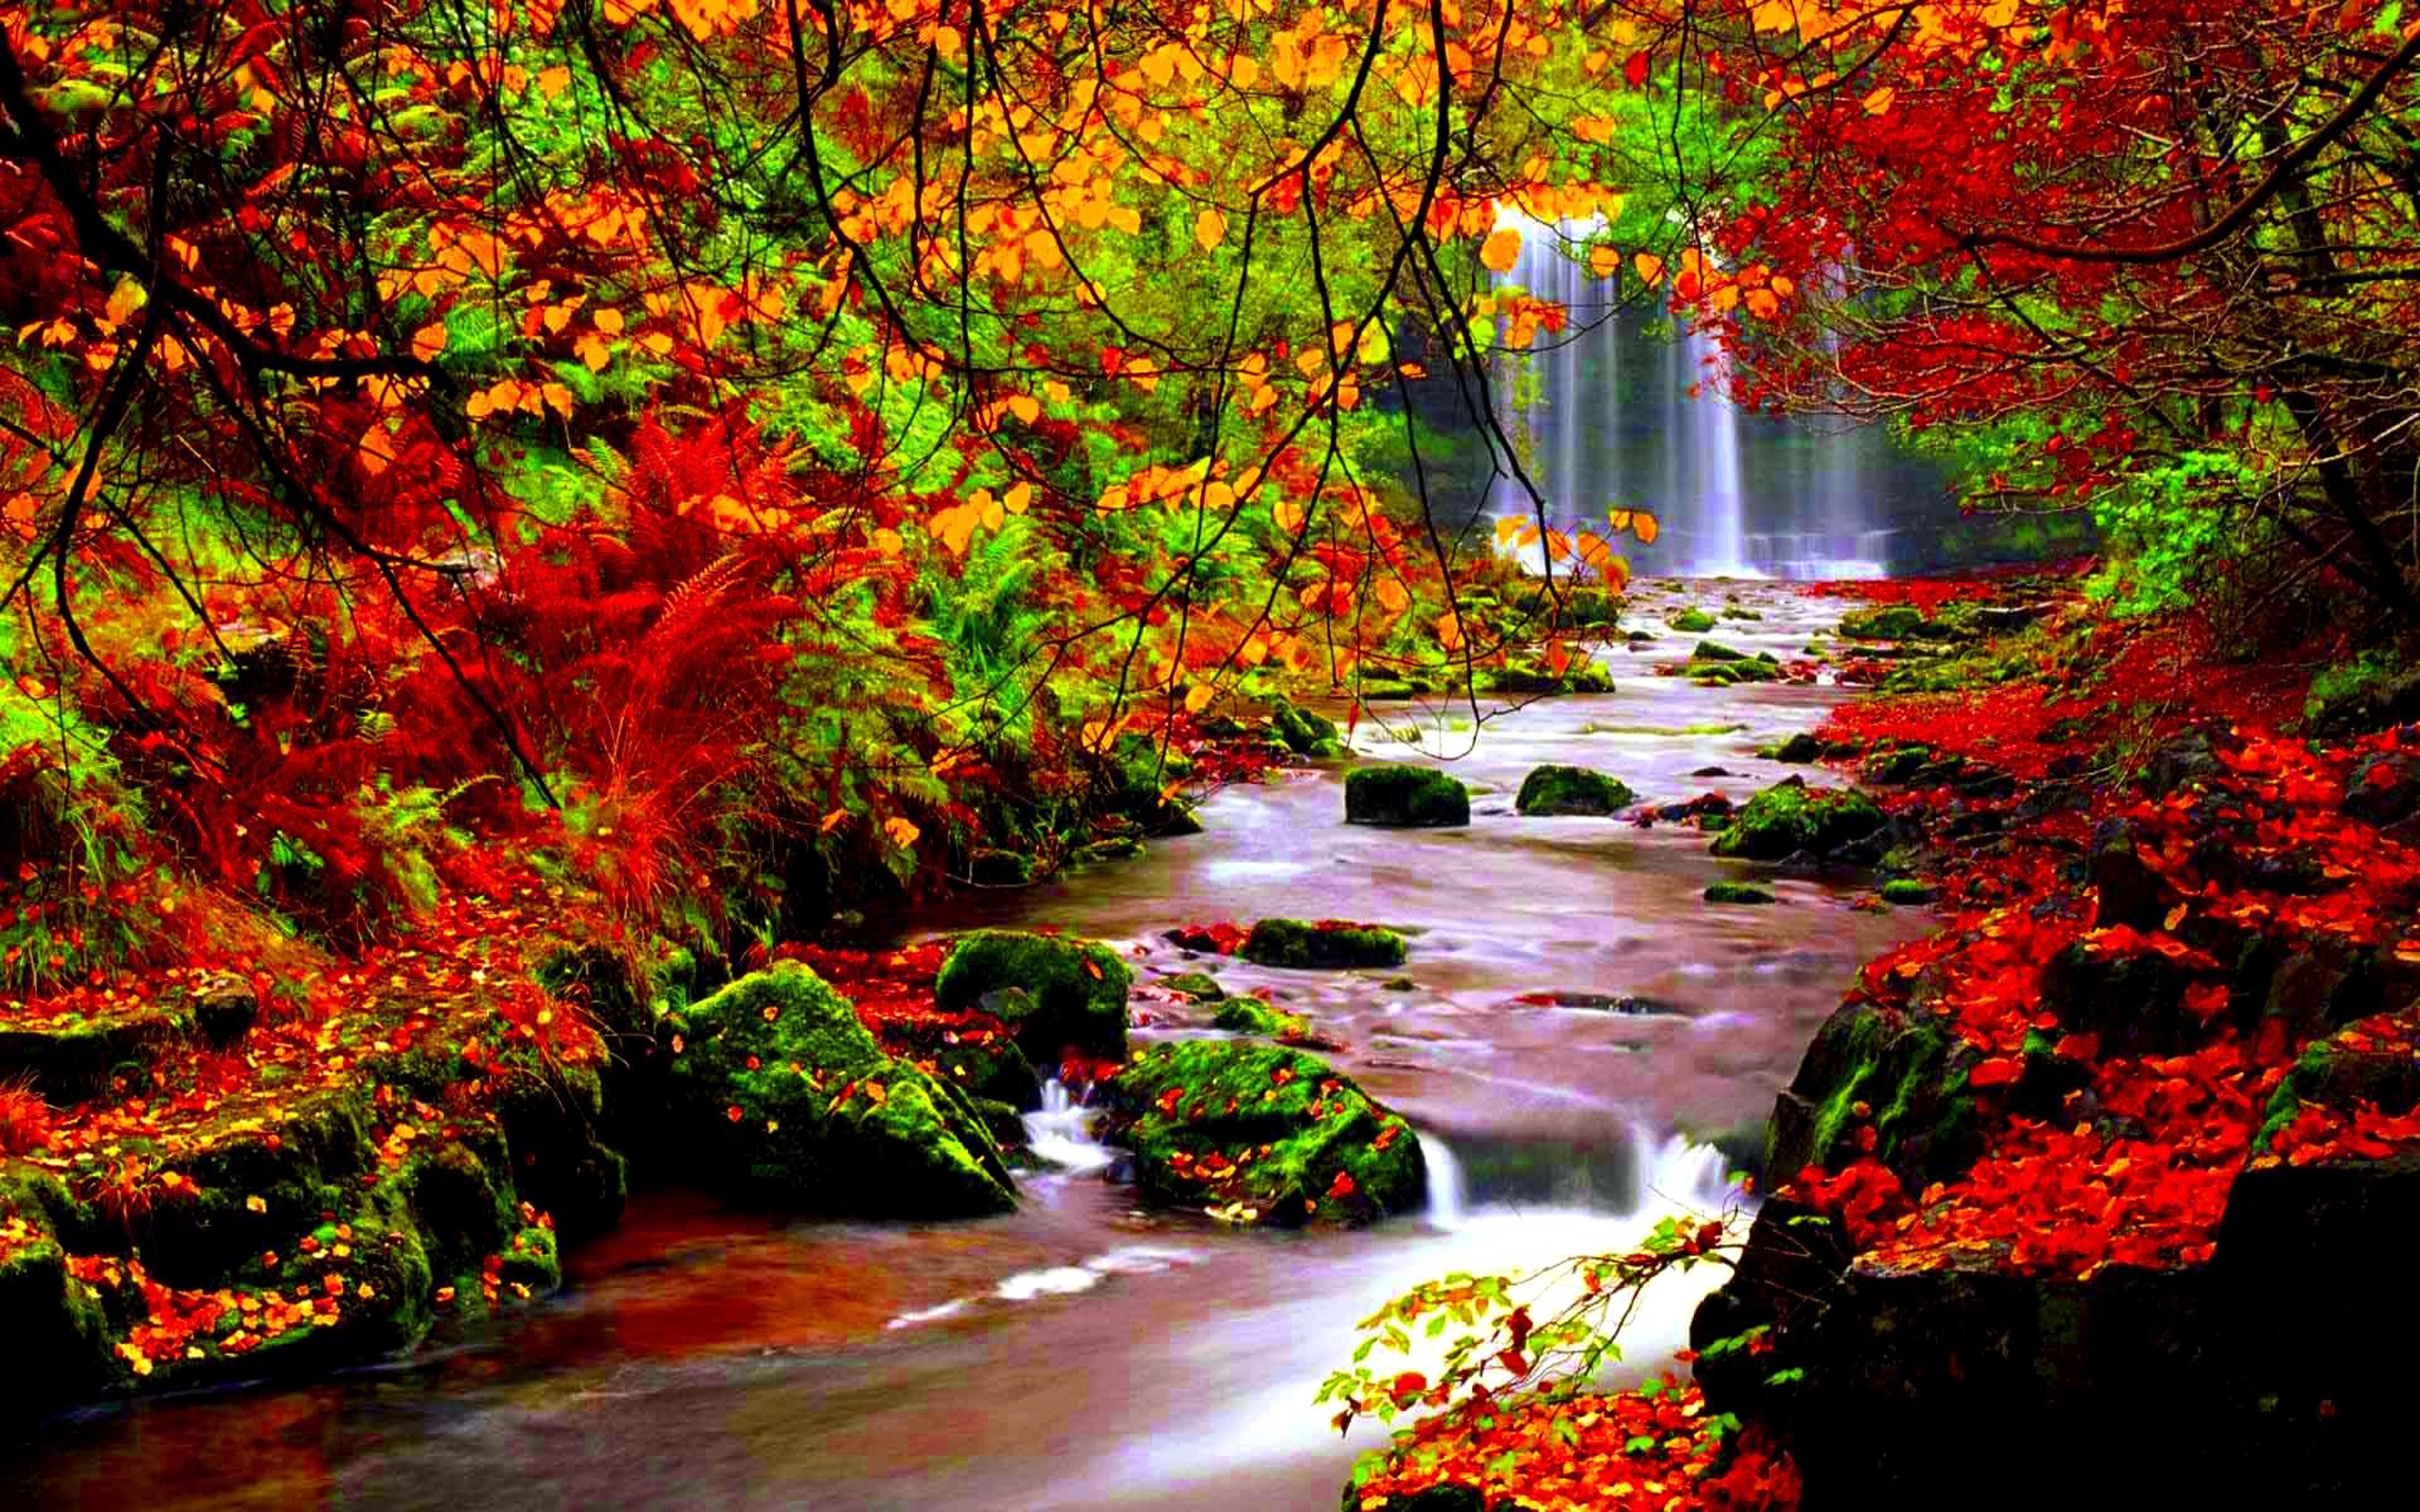 Download Autumn River Wallpaper Full Hd Autumn River Wallpaper Fall